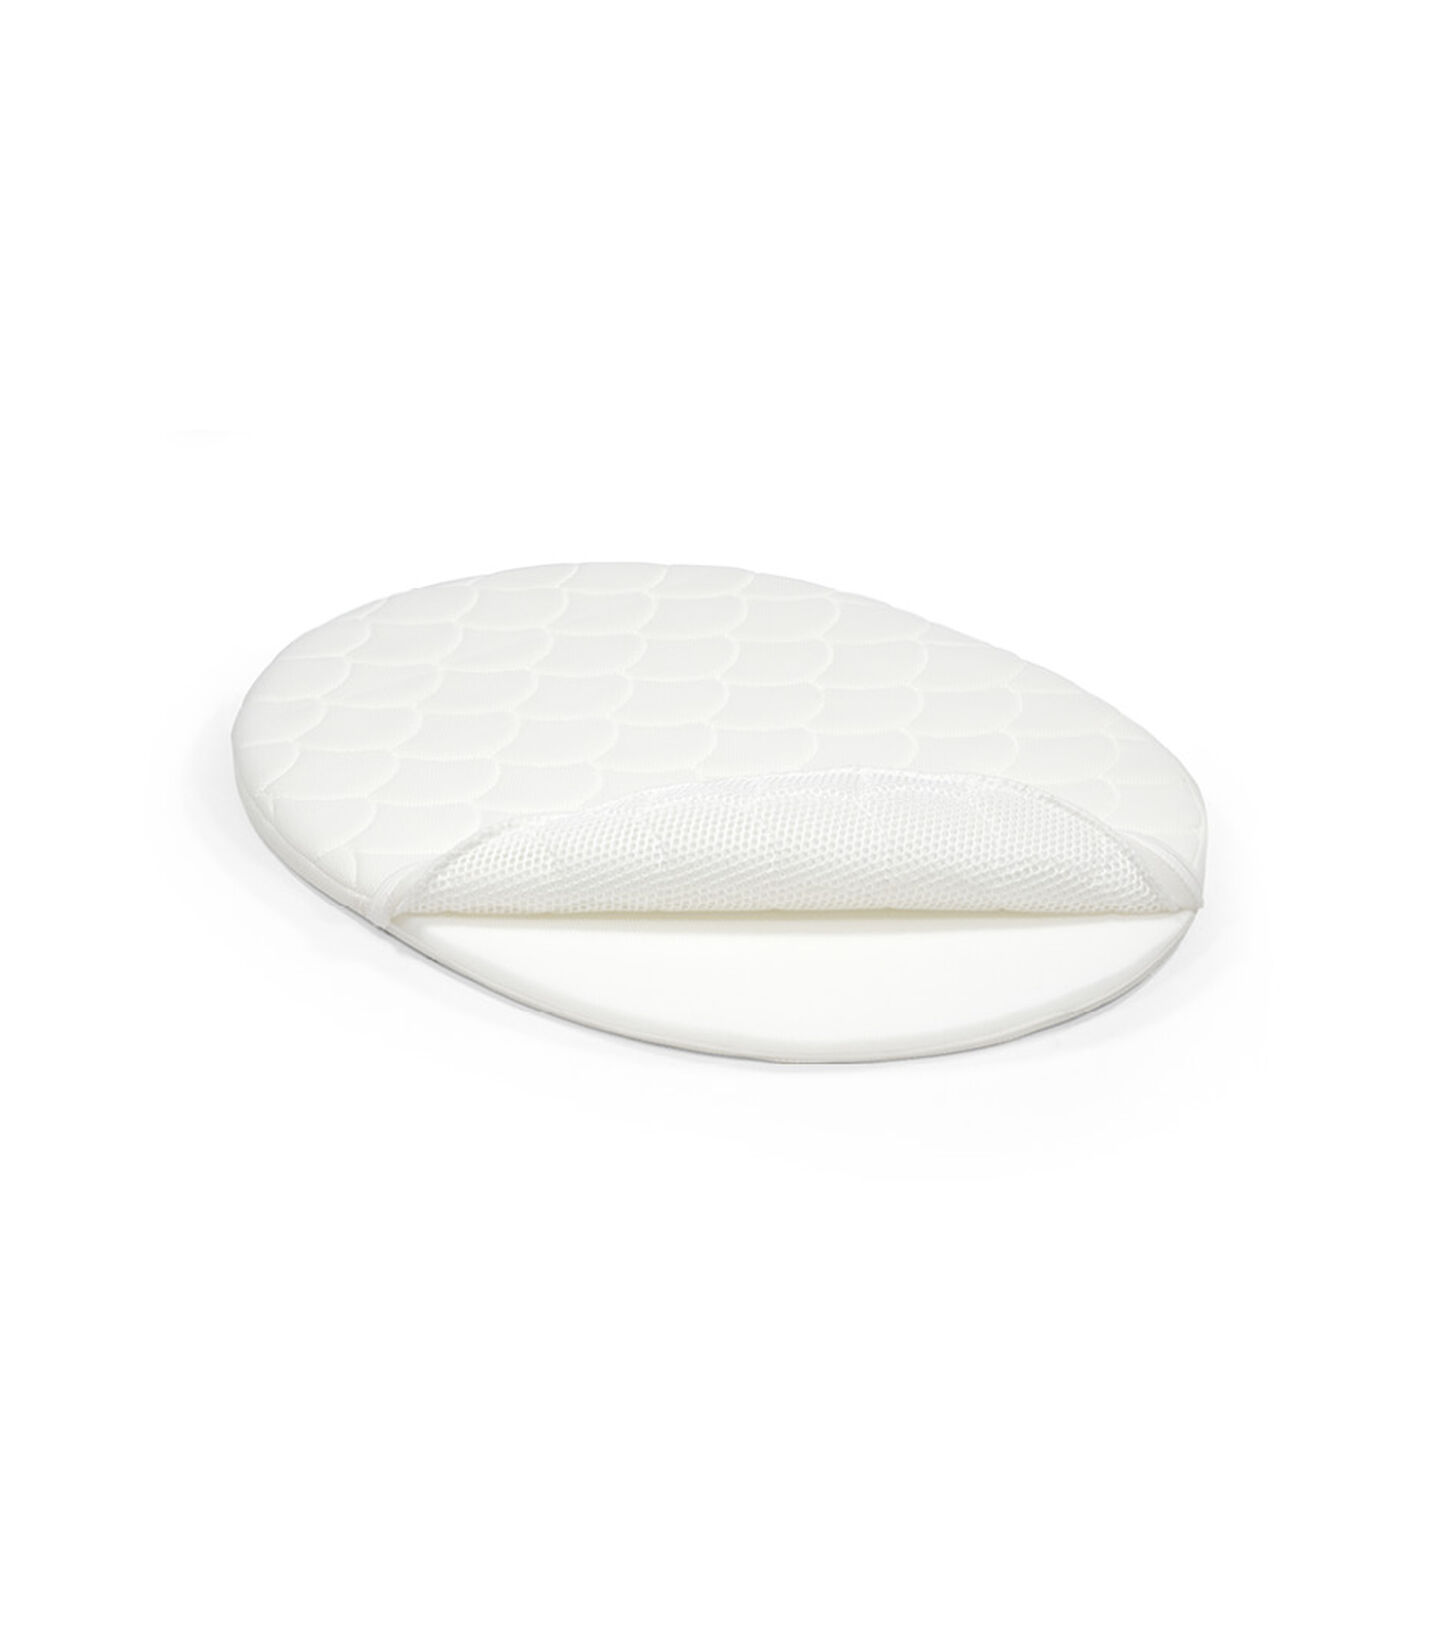 Stokke® Sleepi™ Mini Mattress White, White, mainview view 2